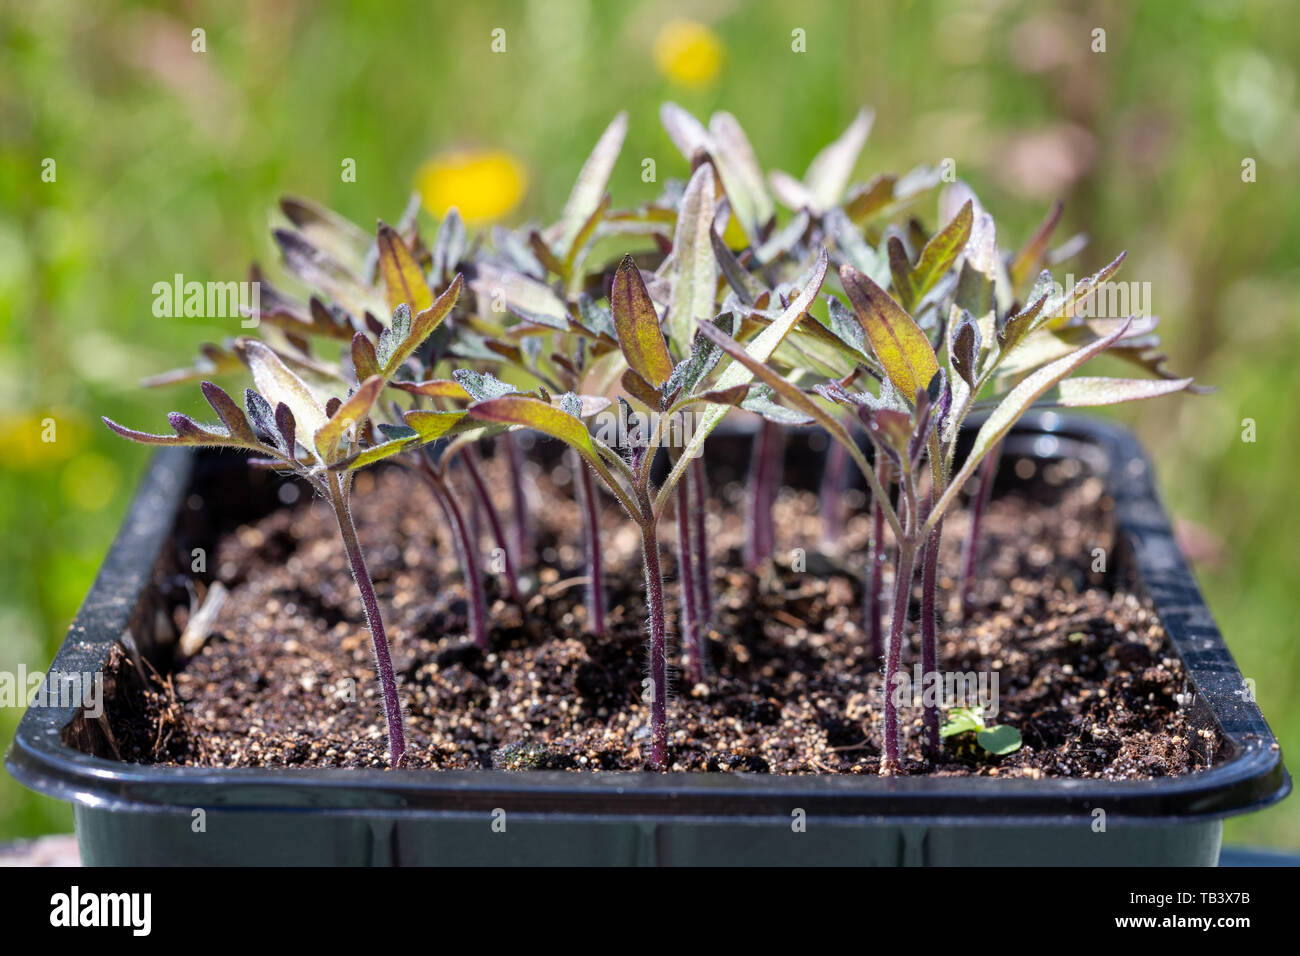 Tomato nursery - Solanaceae - sprouts in black plastic germination tray. Stock Photo